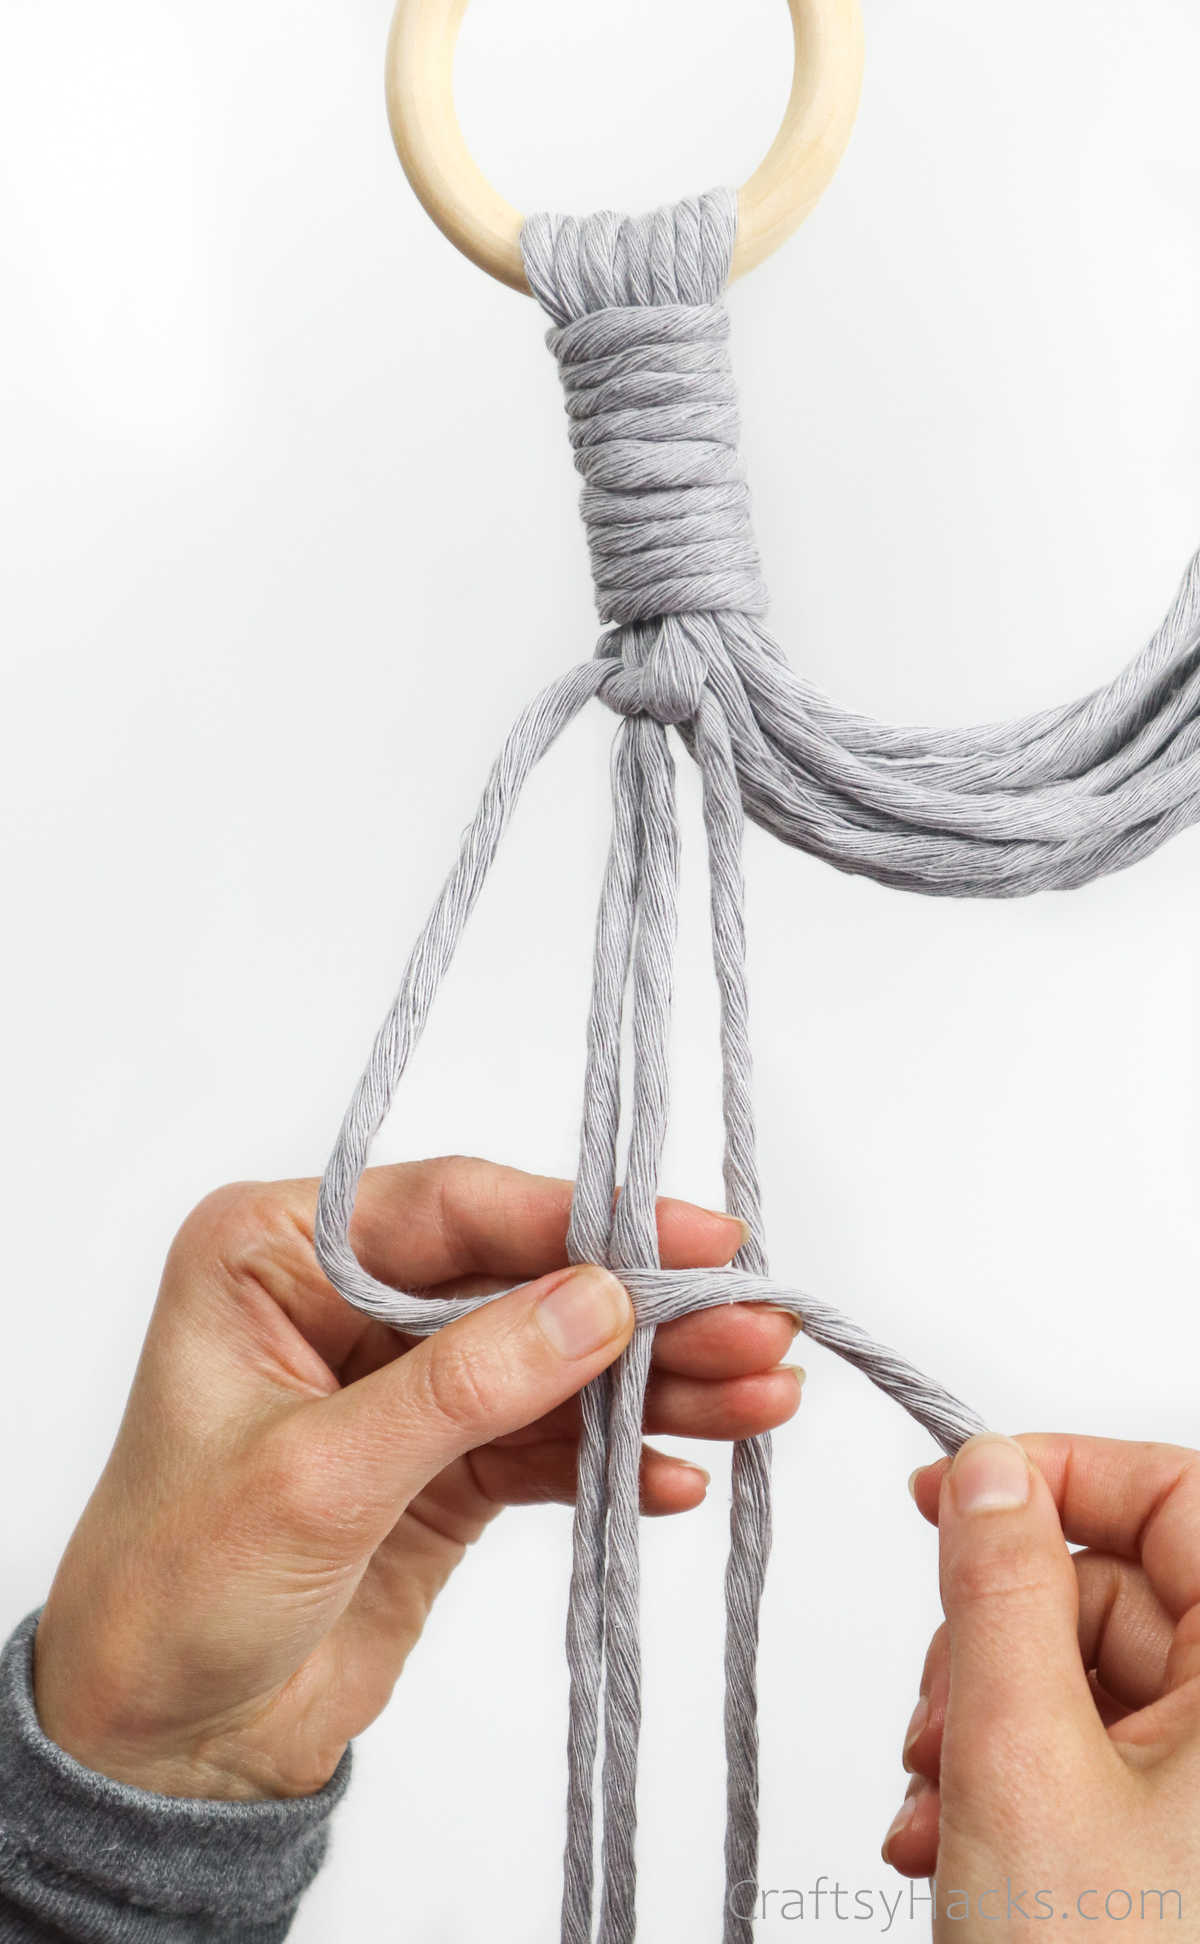 tying string knot